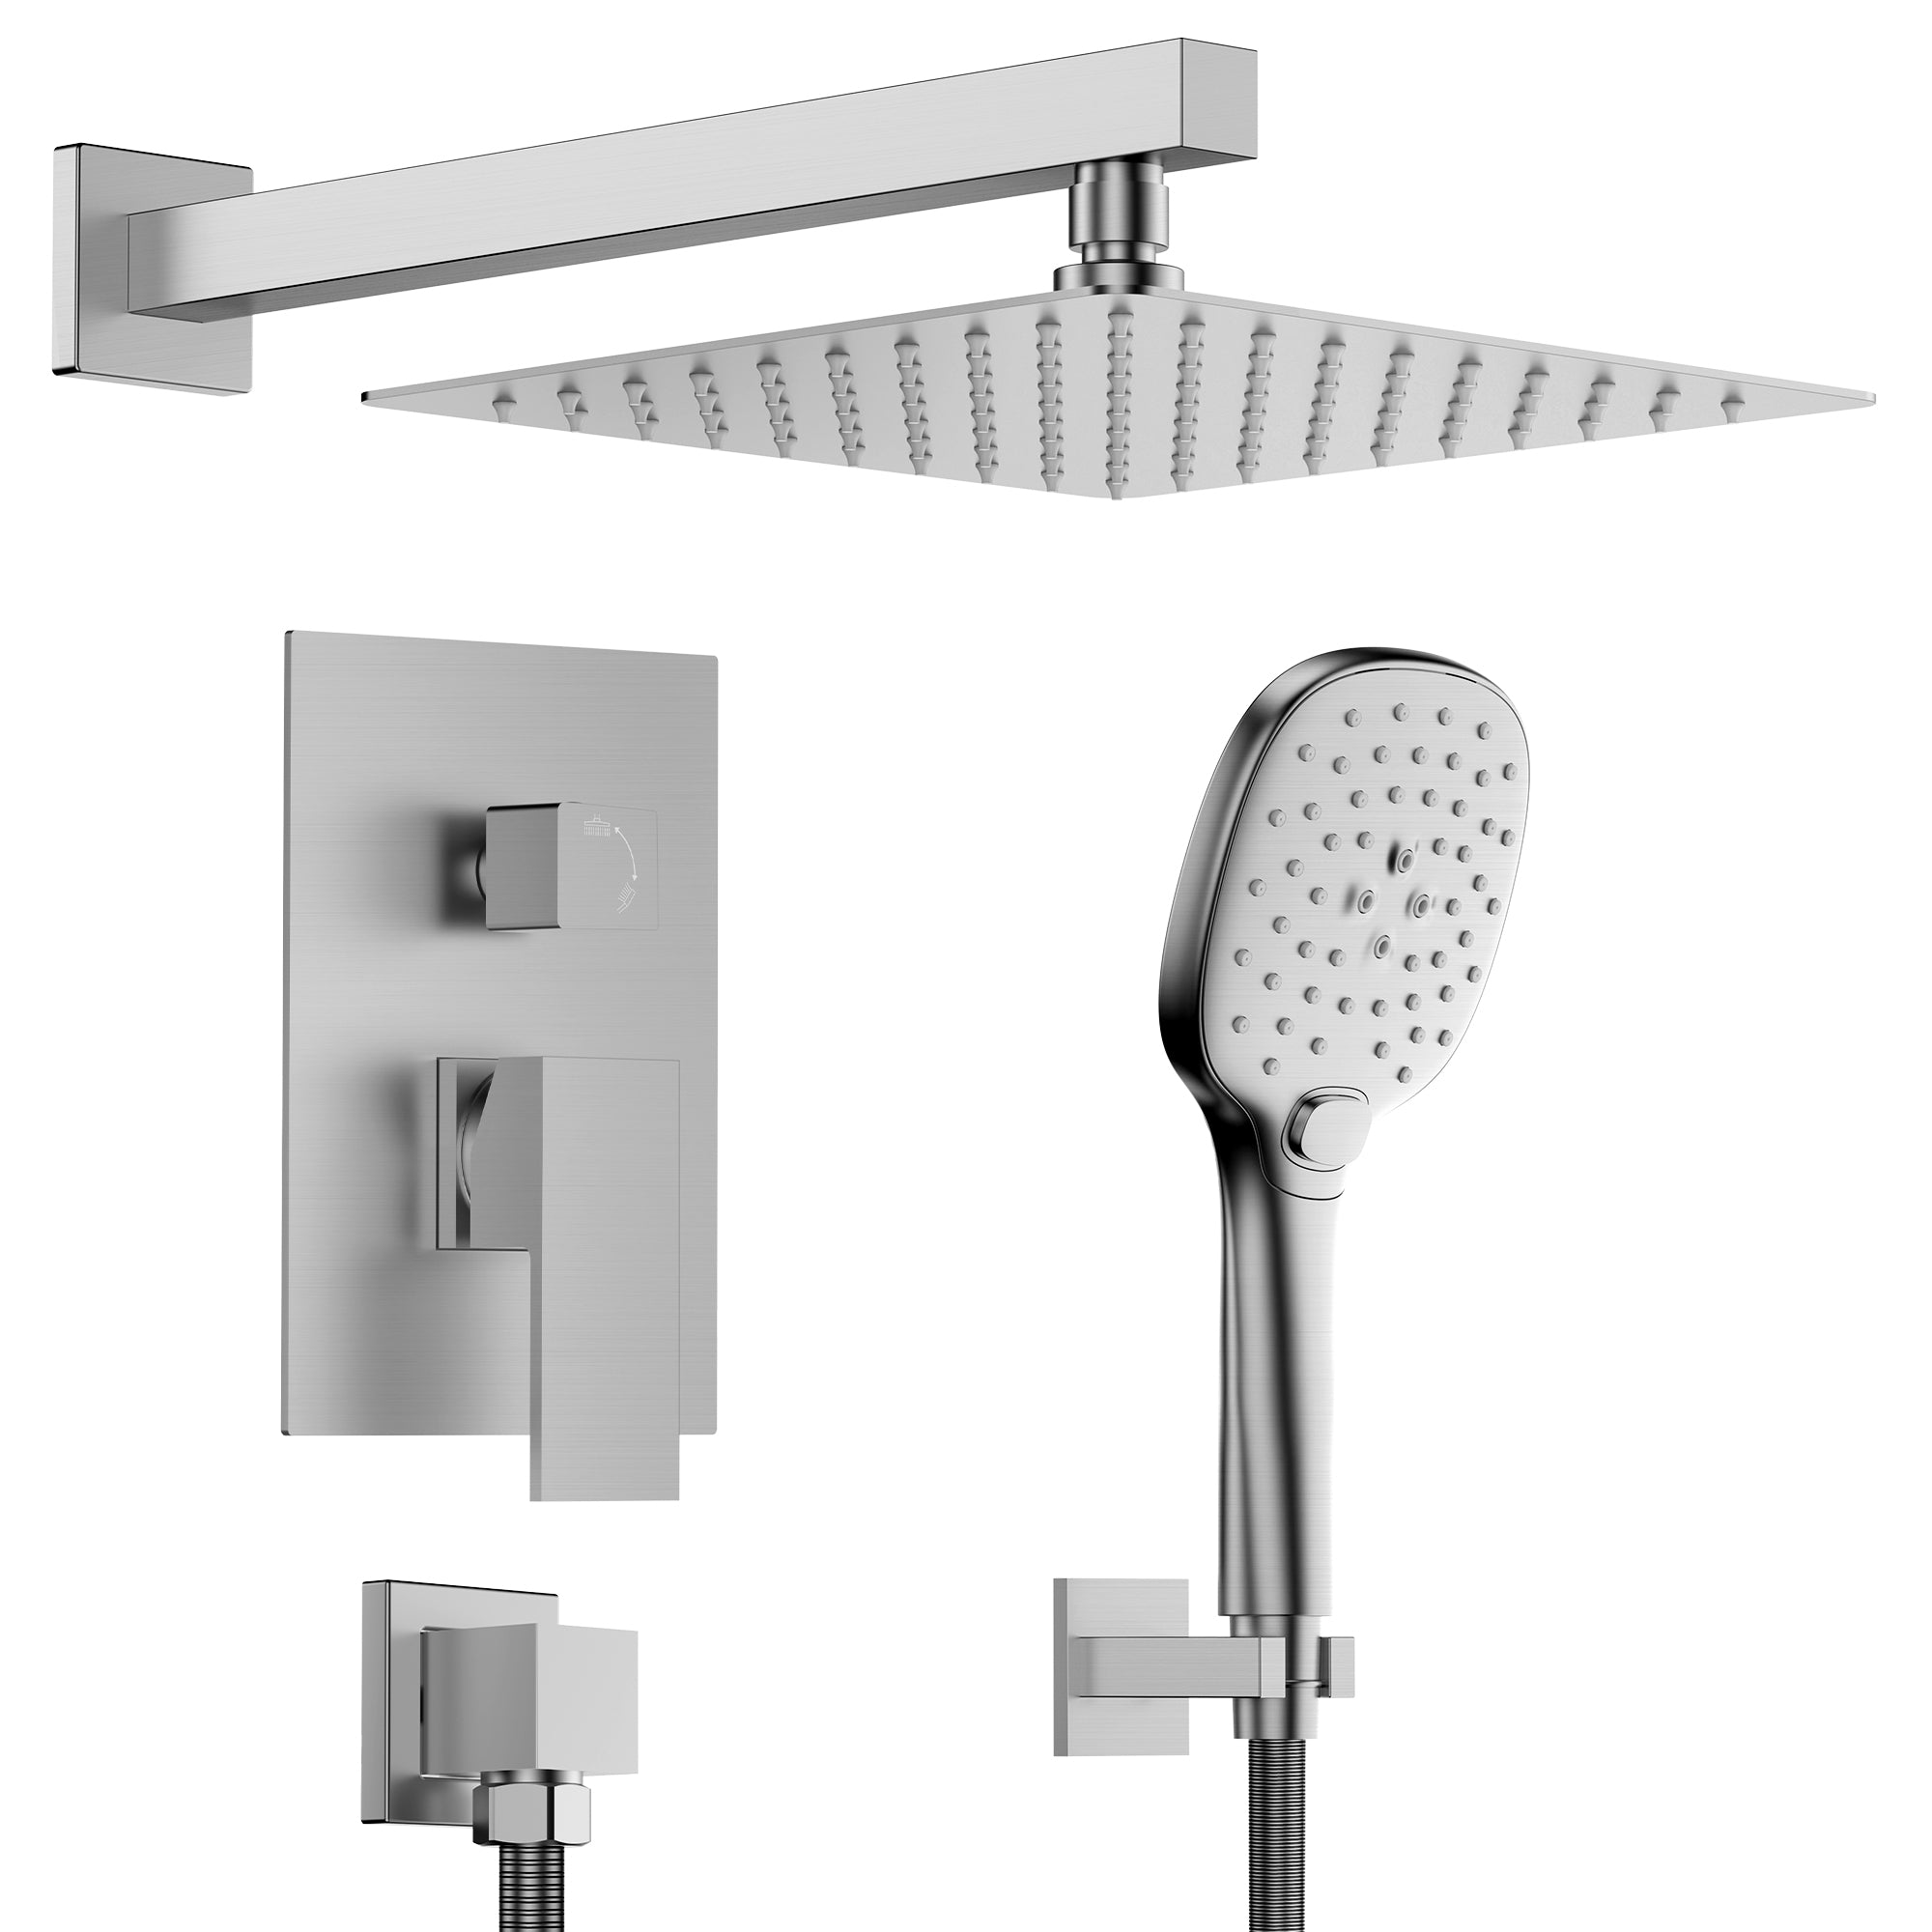 EVERSTEIN Luxury Rainfall Shower System - 10" Ceiling Showerhead with Handheld Spray Combo, High-Pressure Bathroom Fixtures